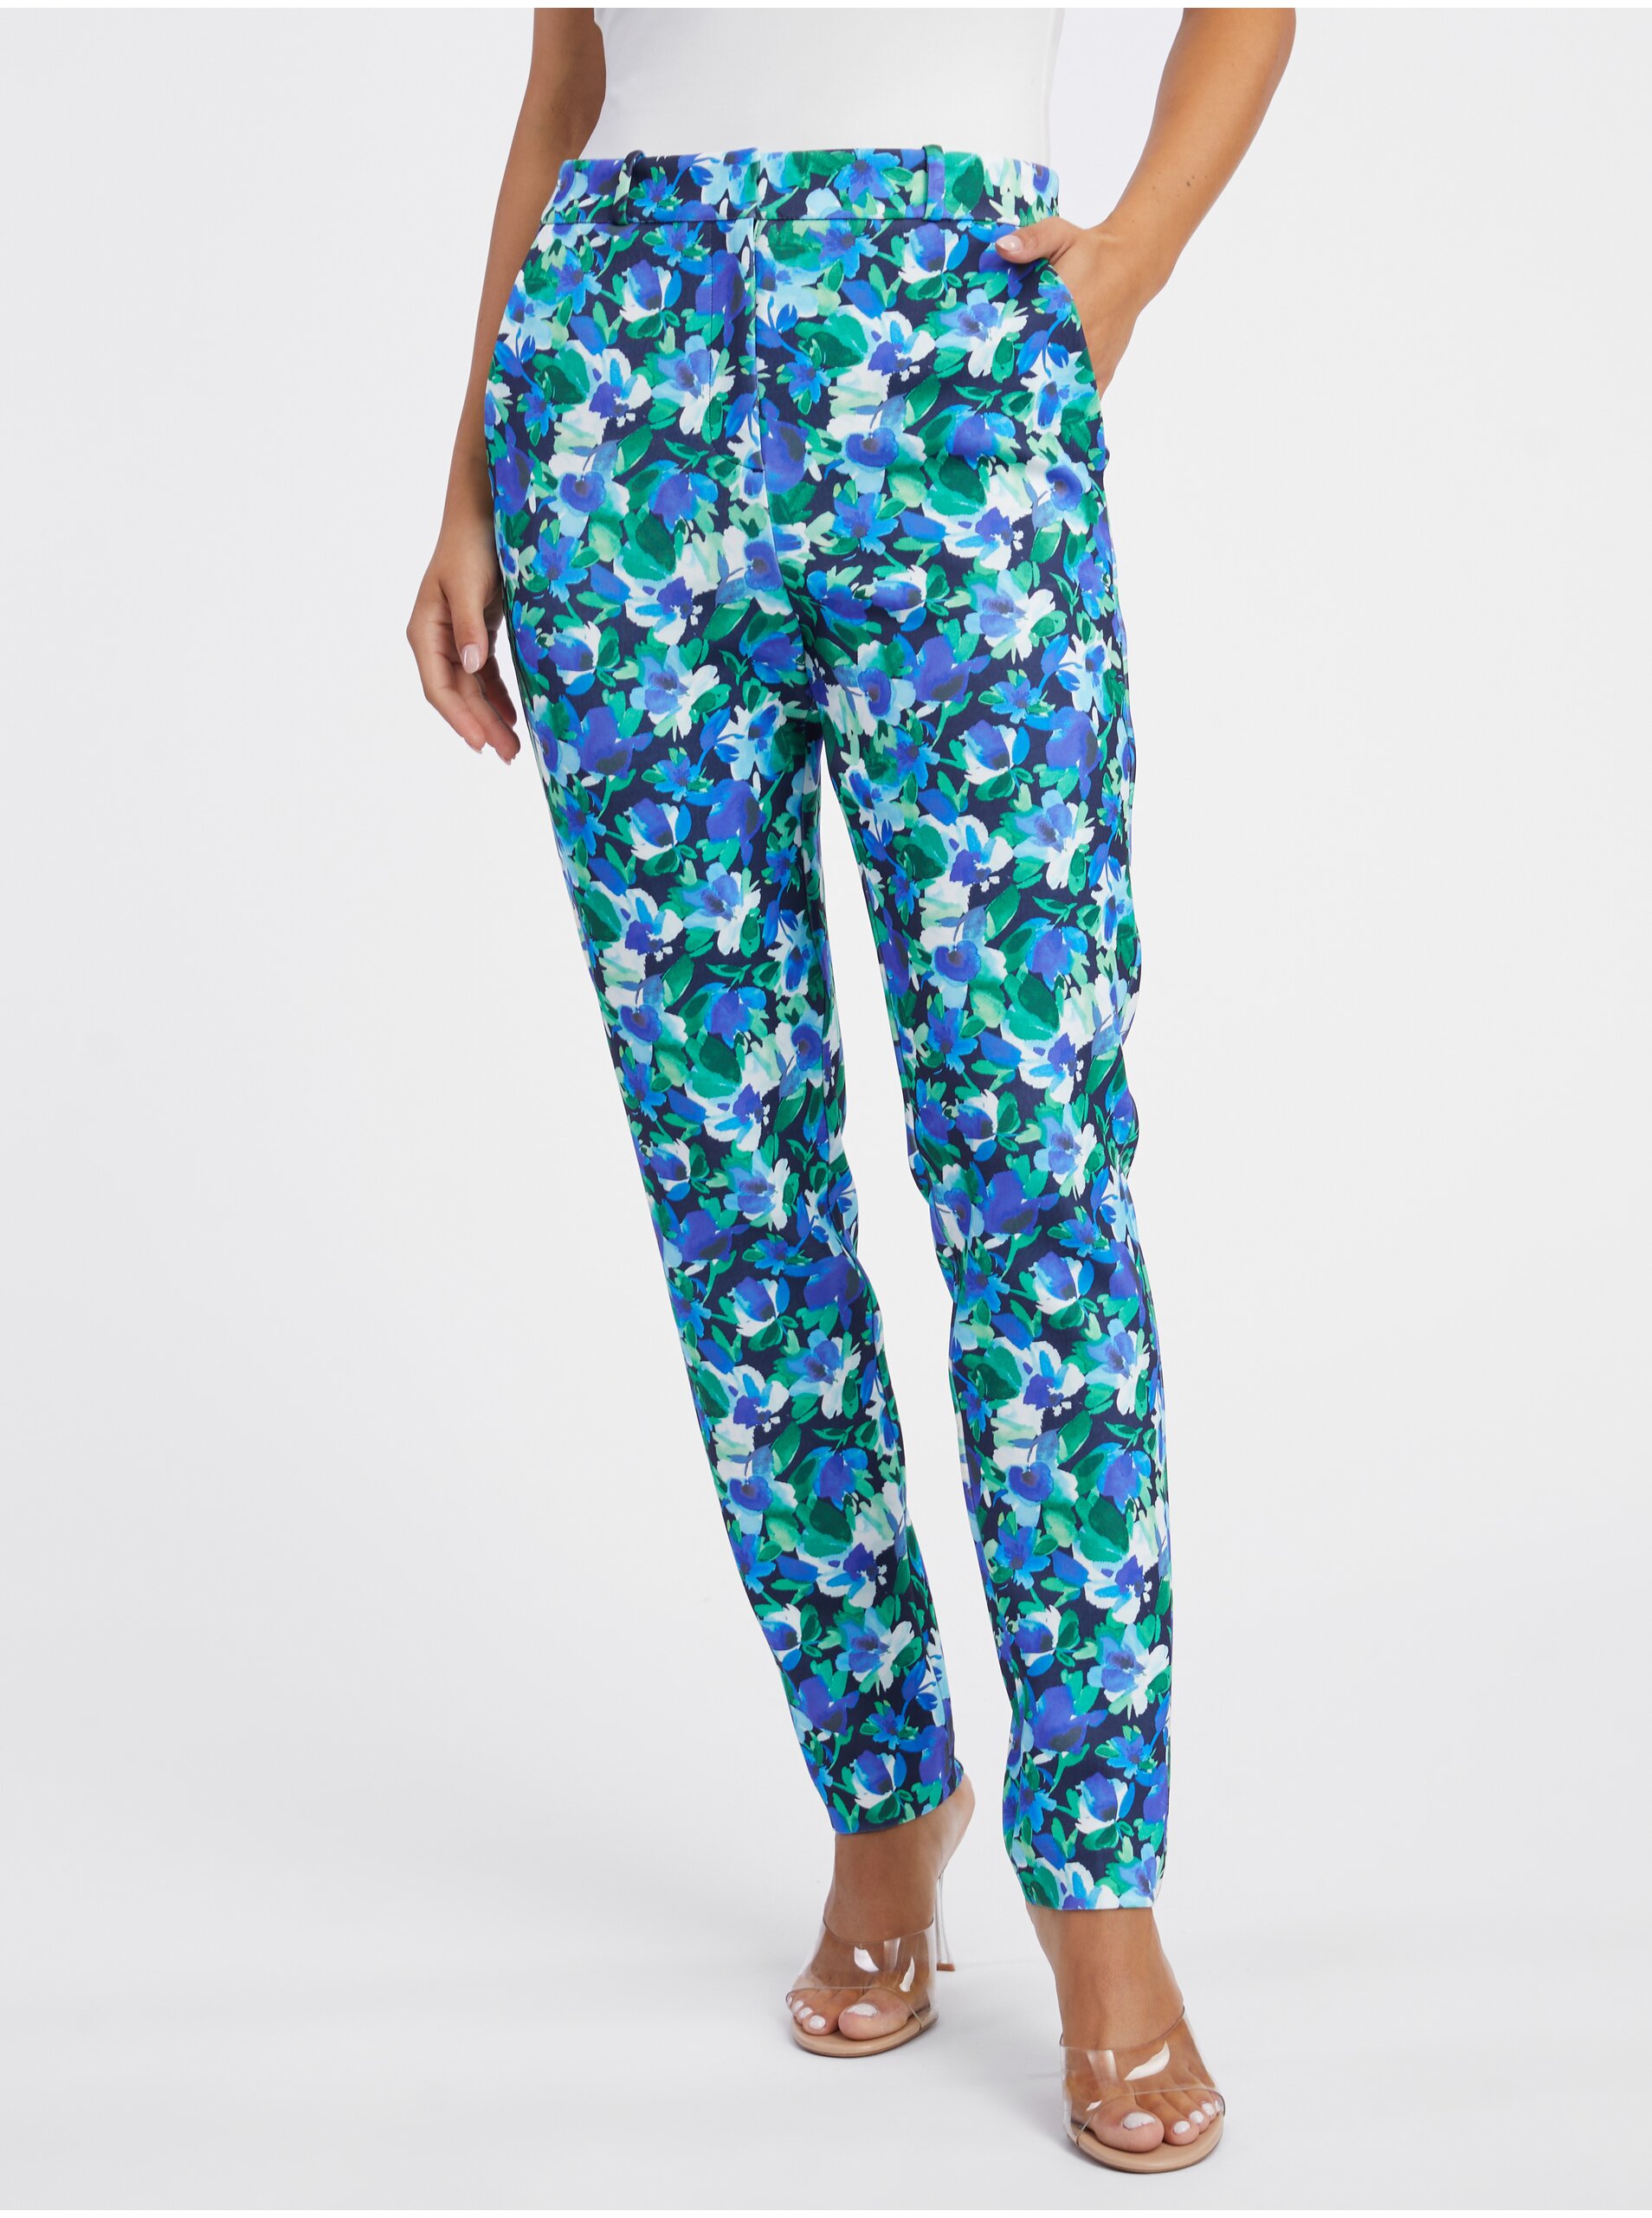 Lacno Zeleno-modré dámske kvetované nohavice ORSAY